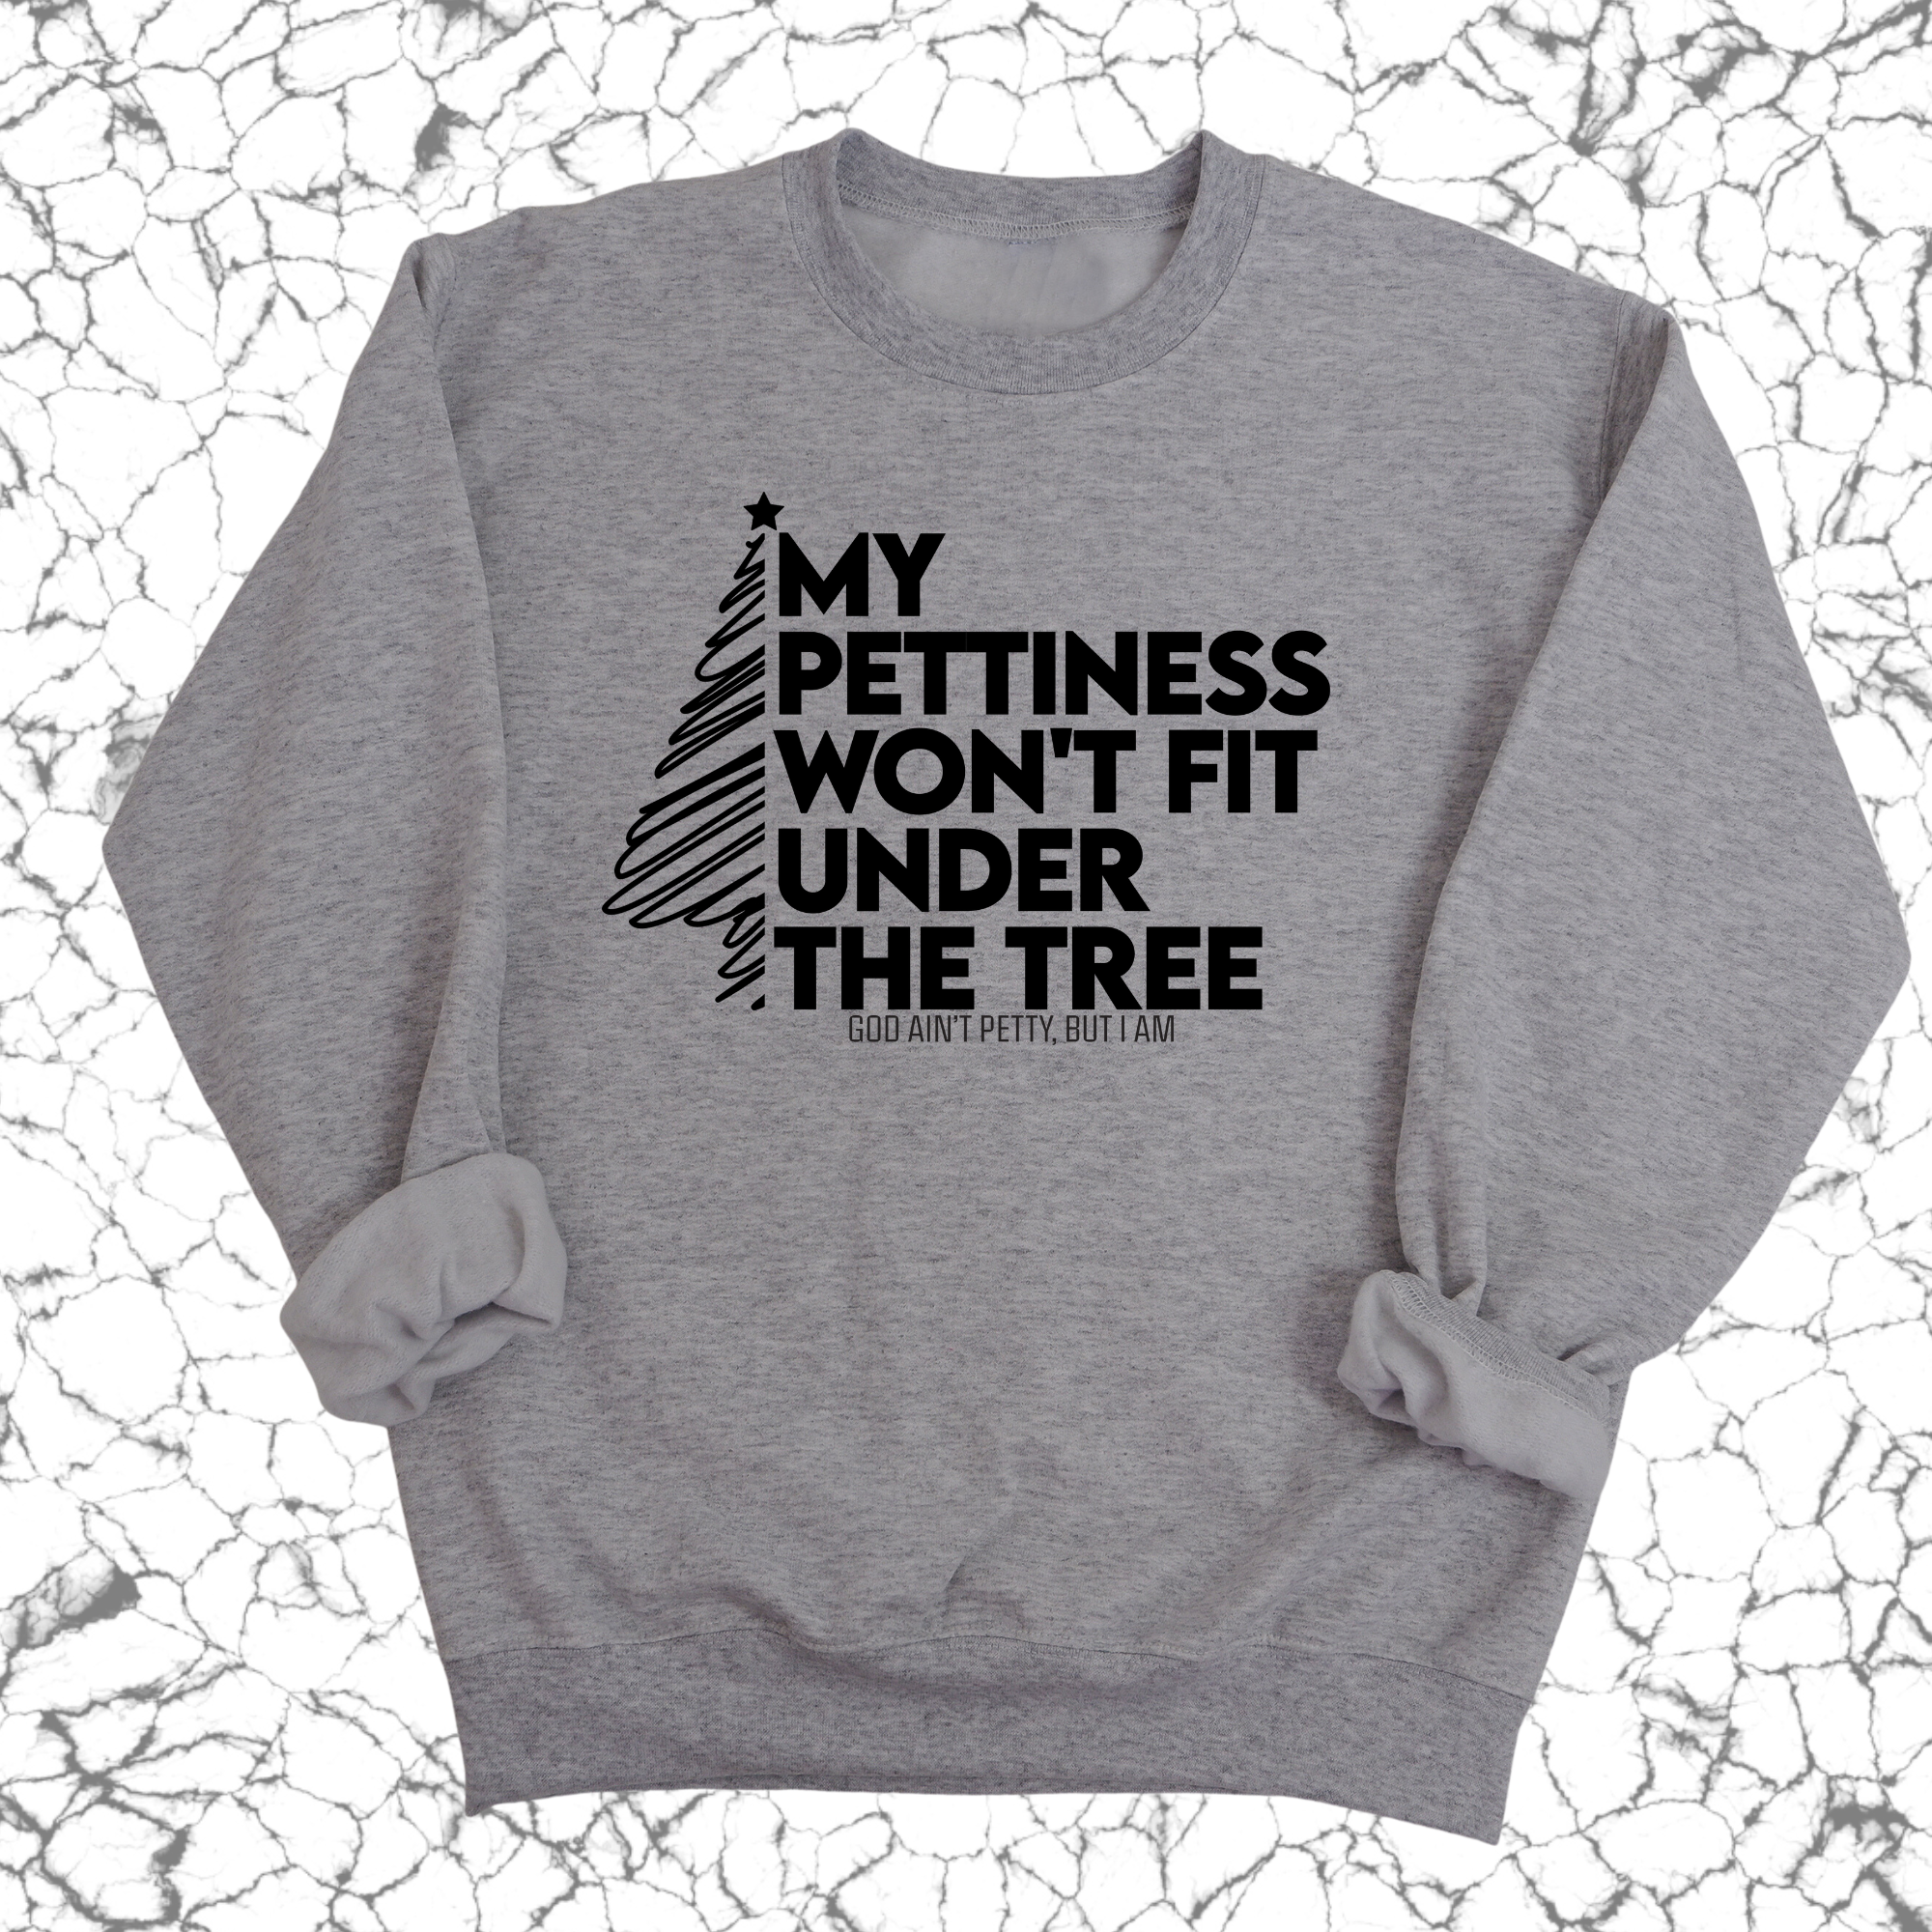 My Pettiness Won't Fit under the Tree Unisex Sweatshirt-Sweatshirt-The Original God Ain't Petty But I Am